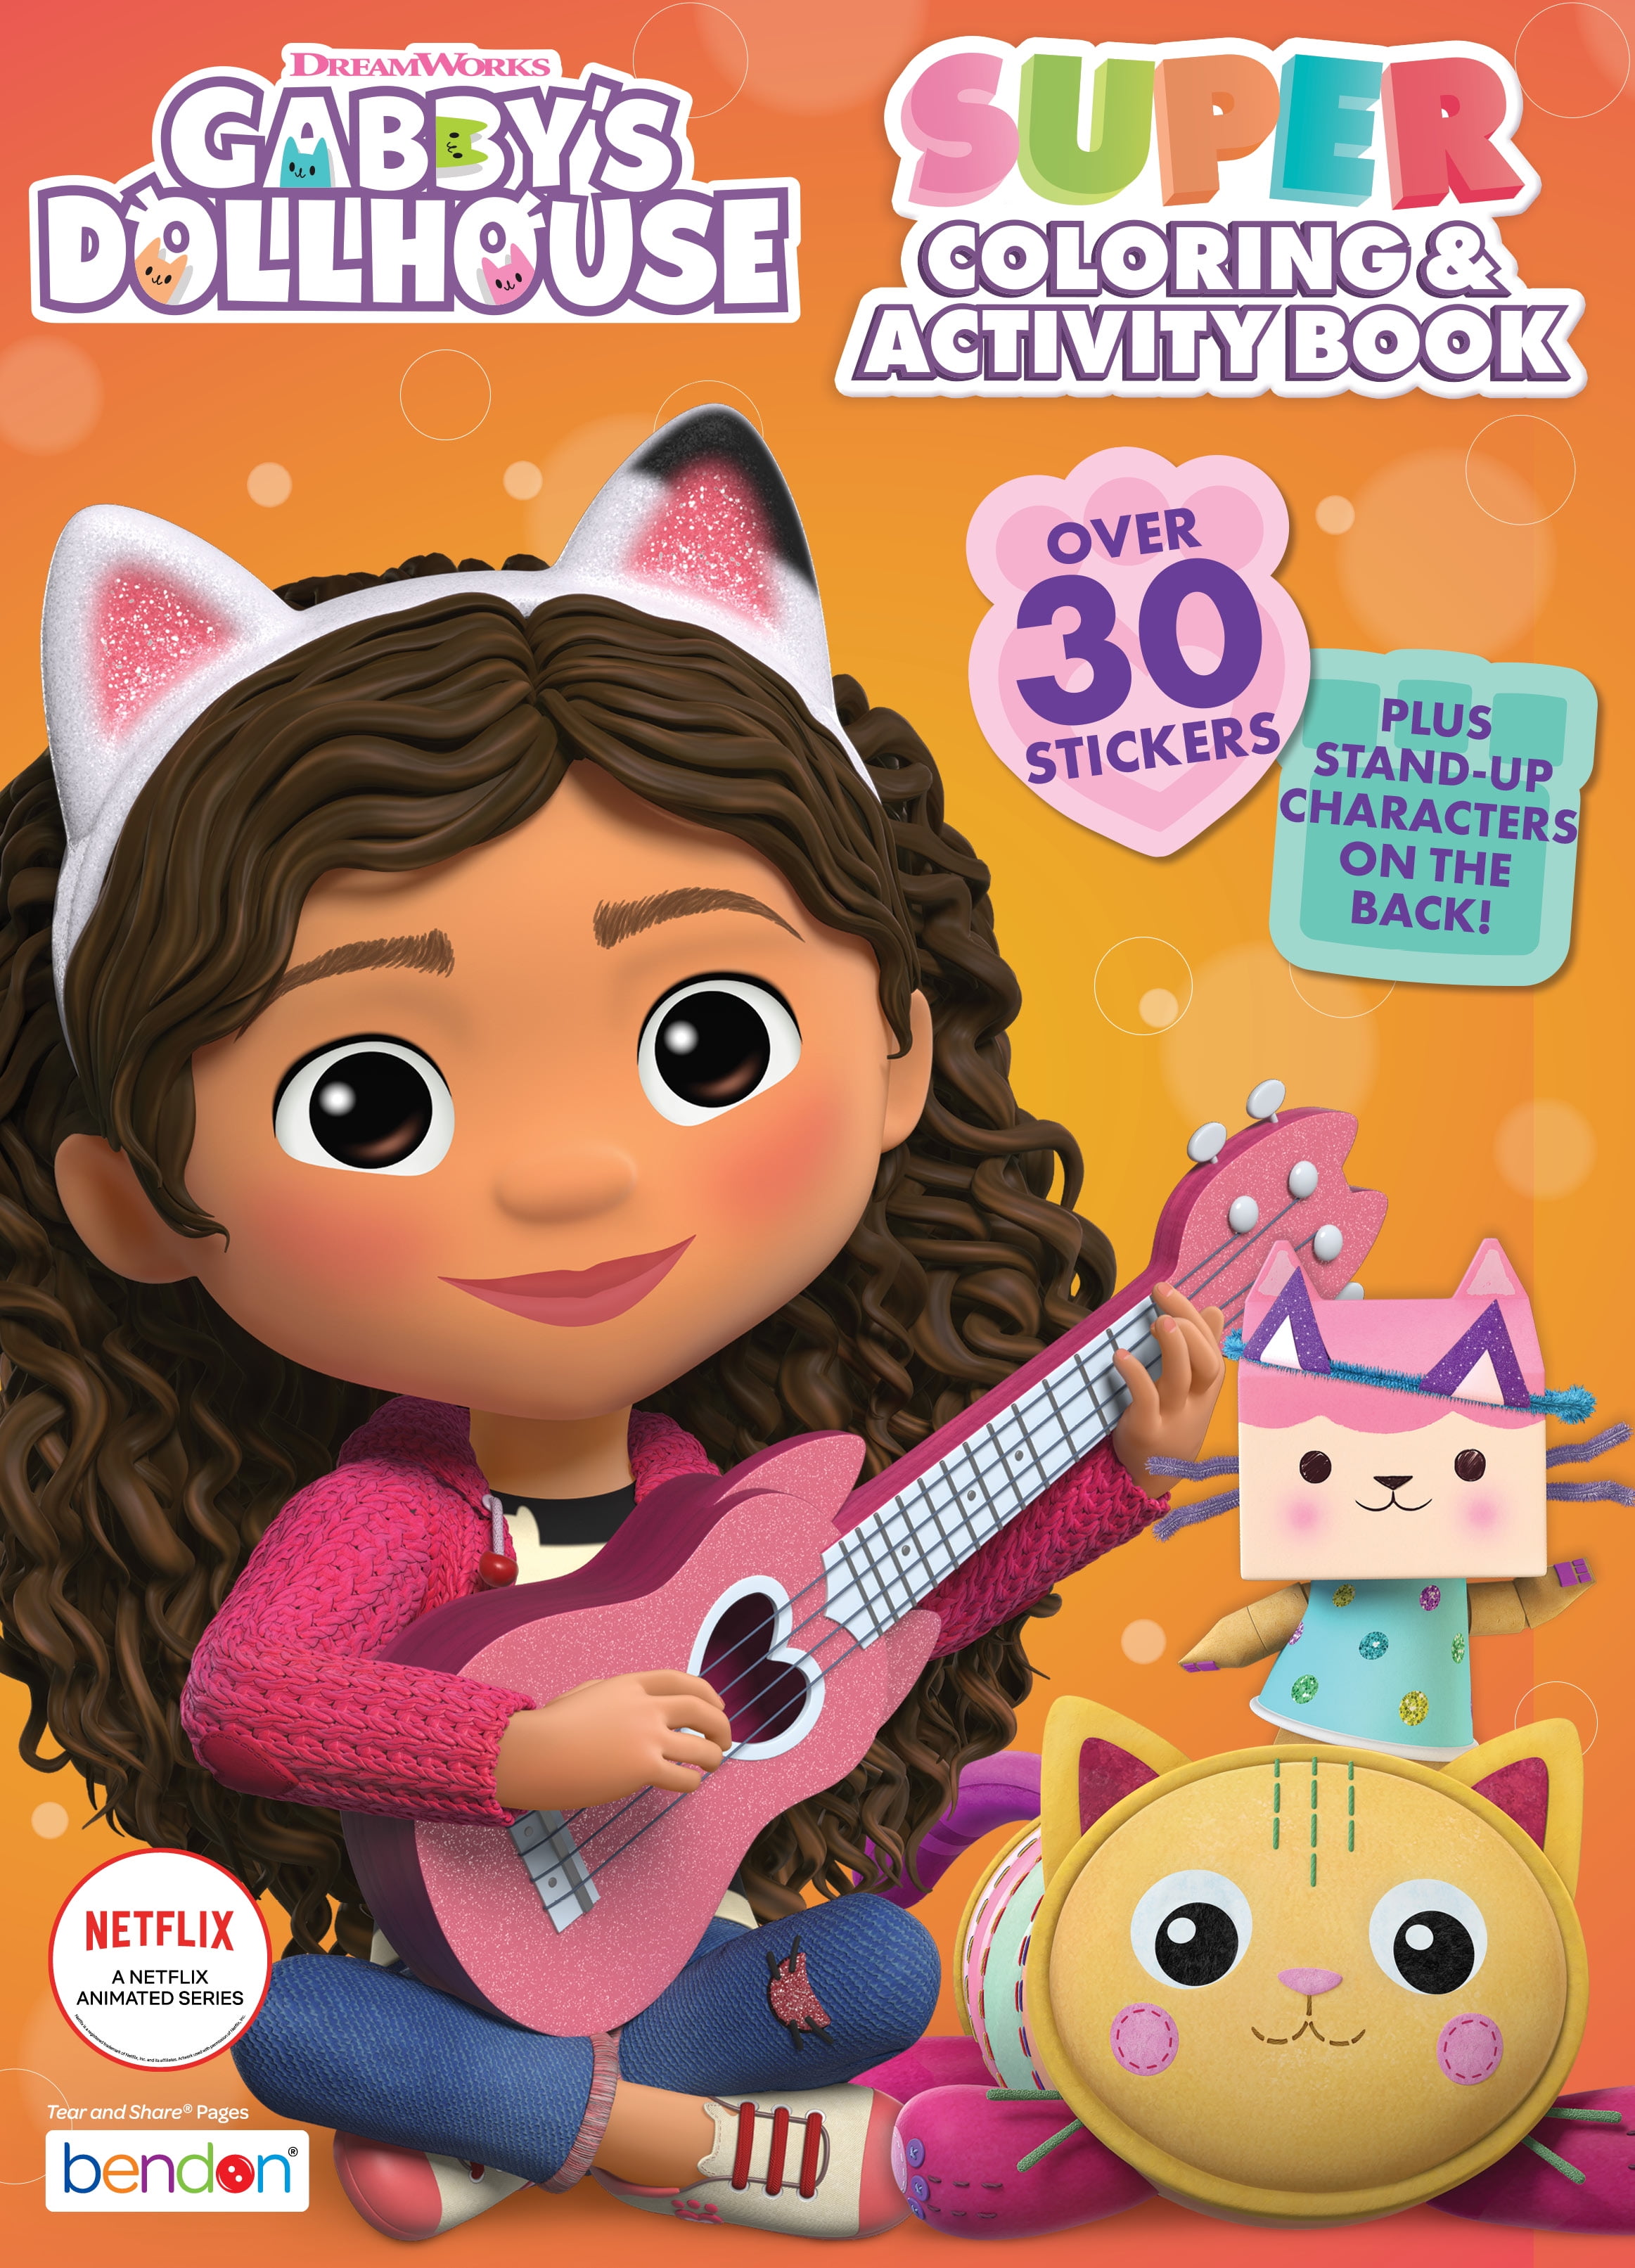 Gabbys Dollhouse Coloring book:Cartoon Coloring & Activity Book